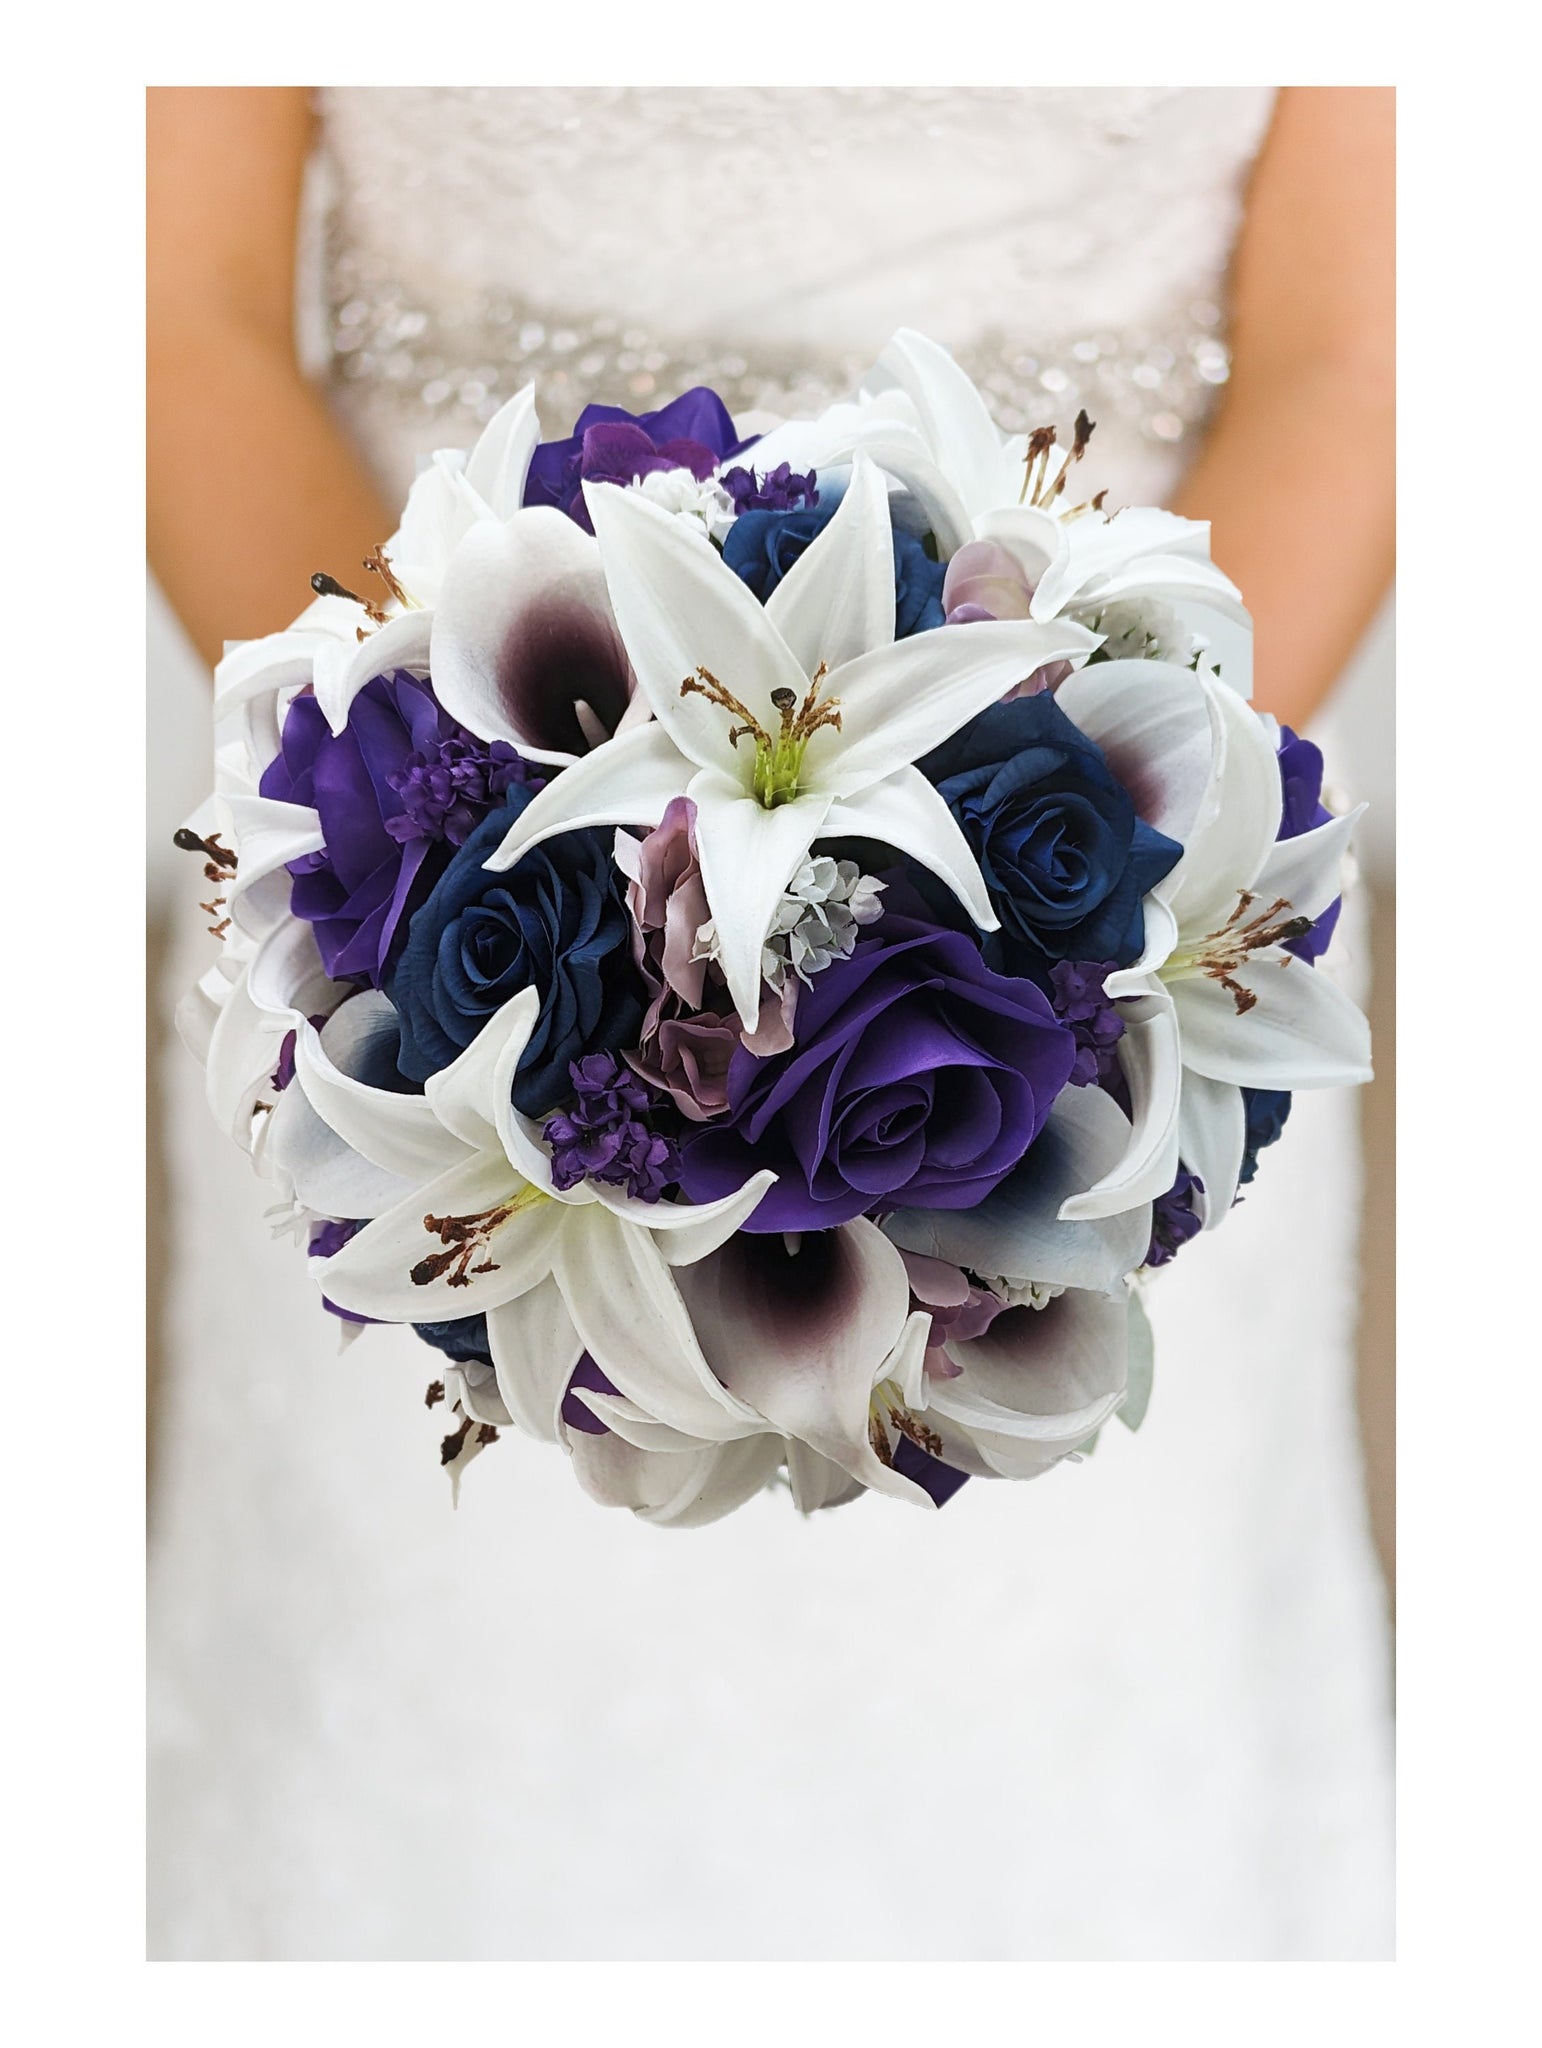 Wedding Bouquet - Navy Purple Roses Plum Picasso Callas White Tiger Lilies - Bridal Bridesmaid Bouquet Groom Groomsmen Boutonniere & More!